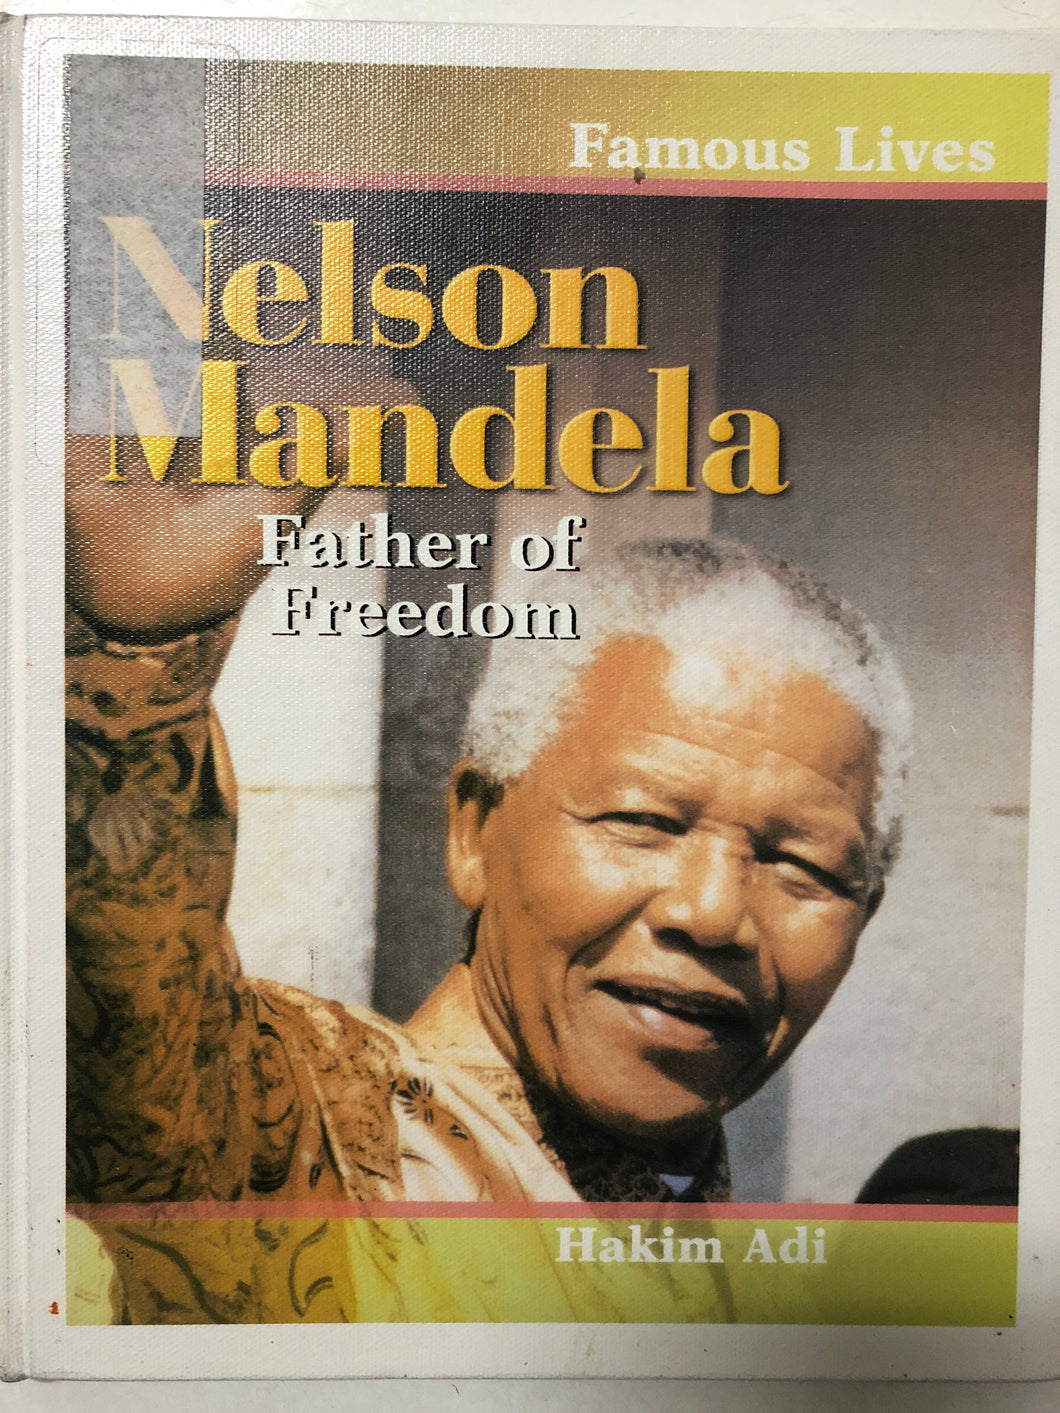 Nelson Mandela Father of Freedom of Freedom - Slick Cat Books 